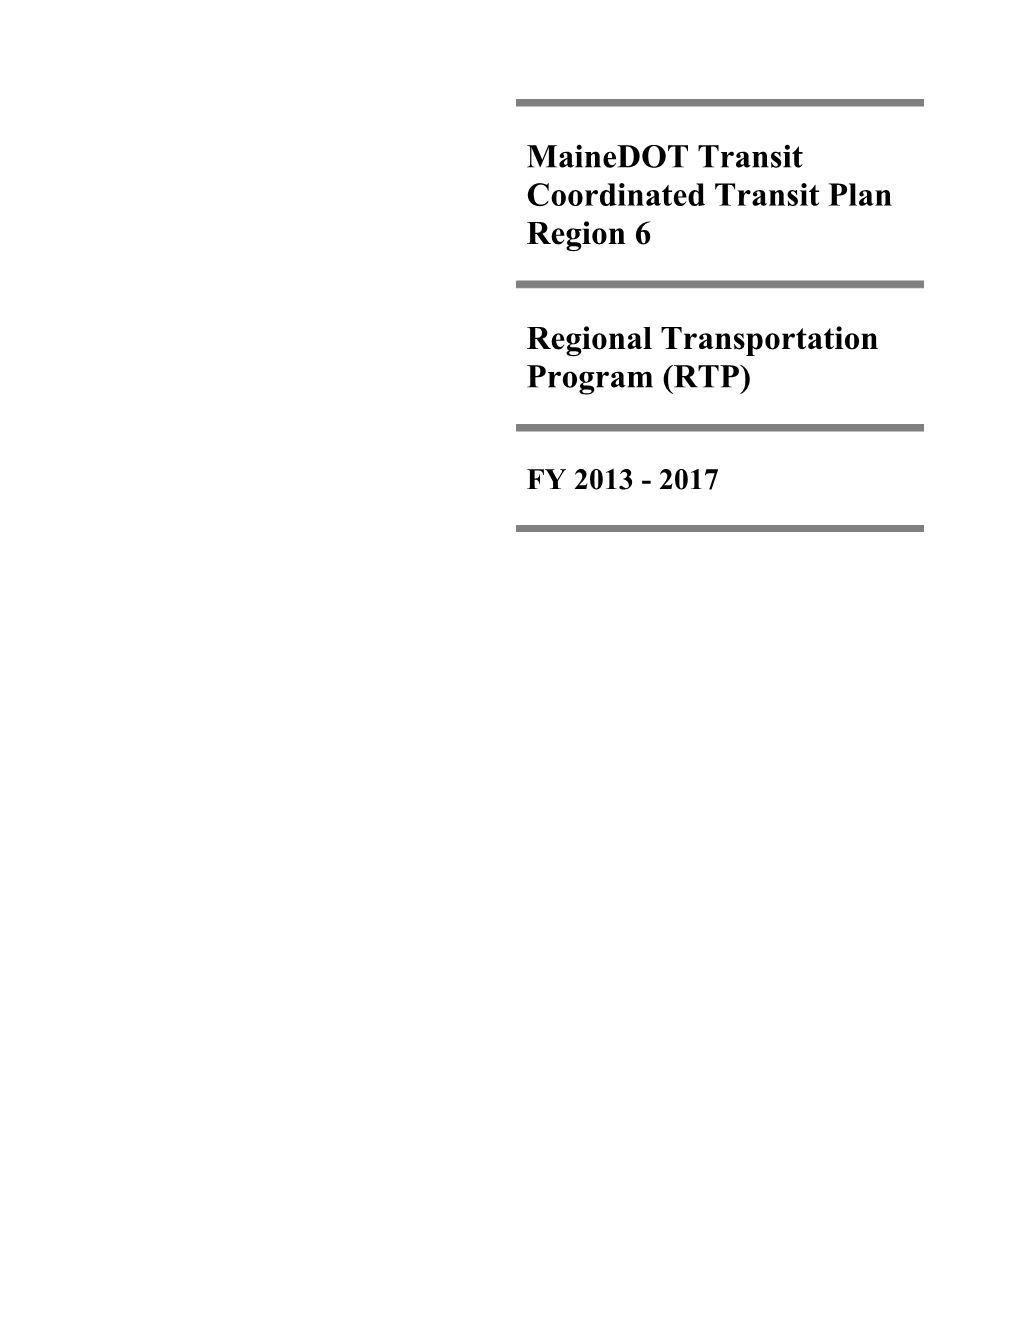 Mainedot Locally Coordinated Transit Plan - RTP